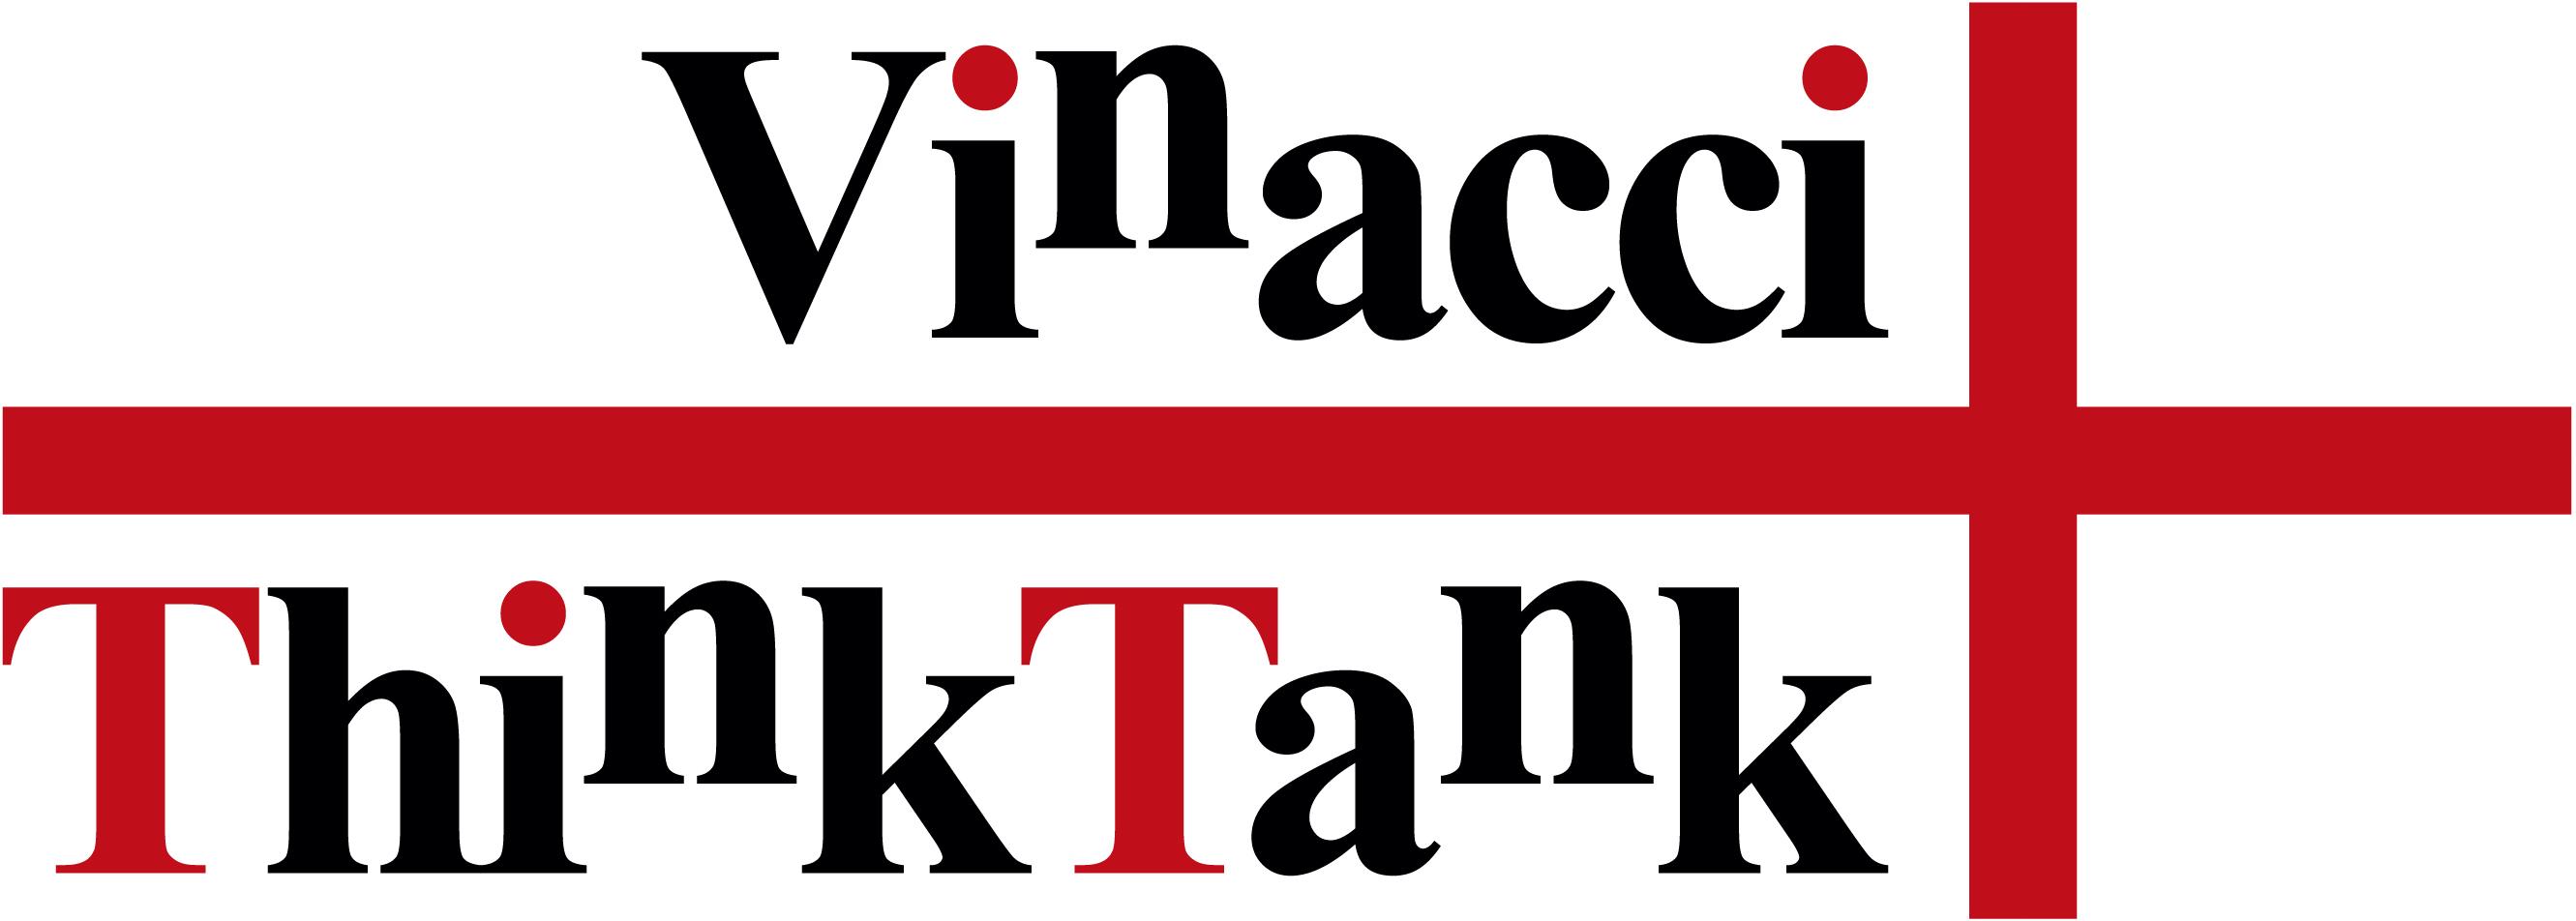 Vinacci Think Tank logo